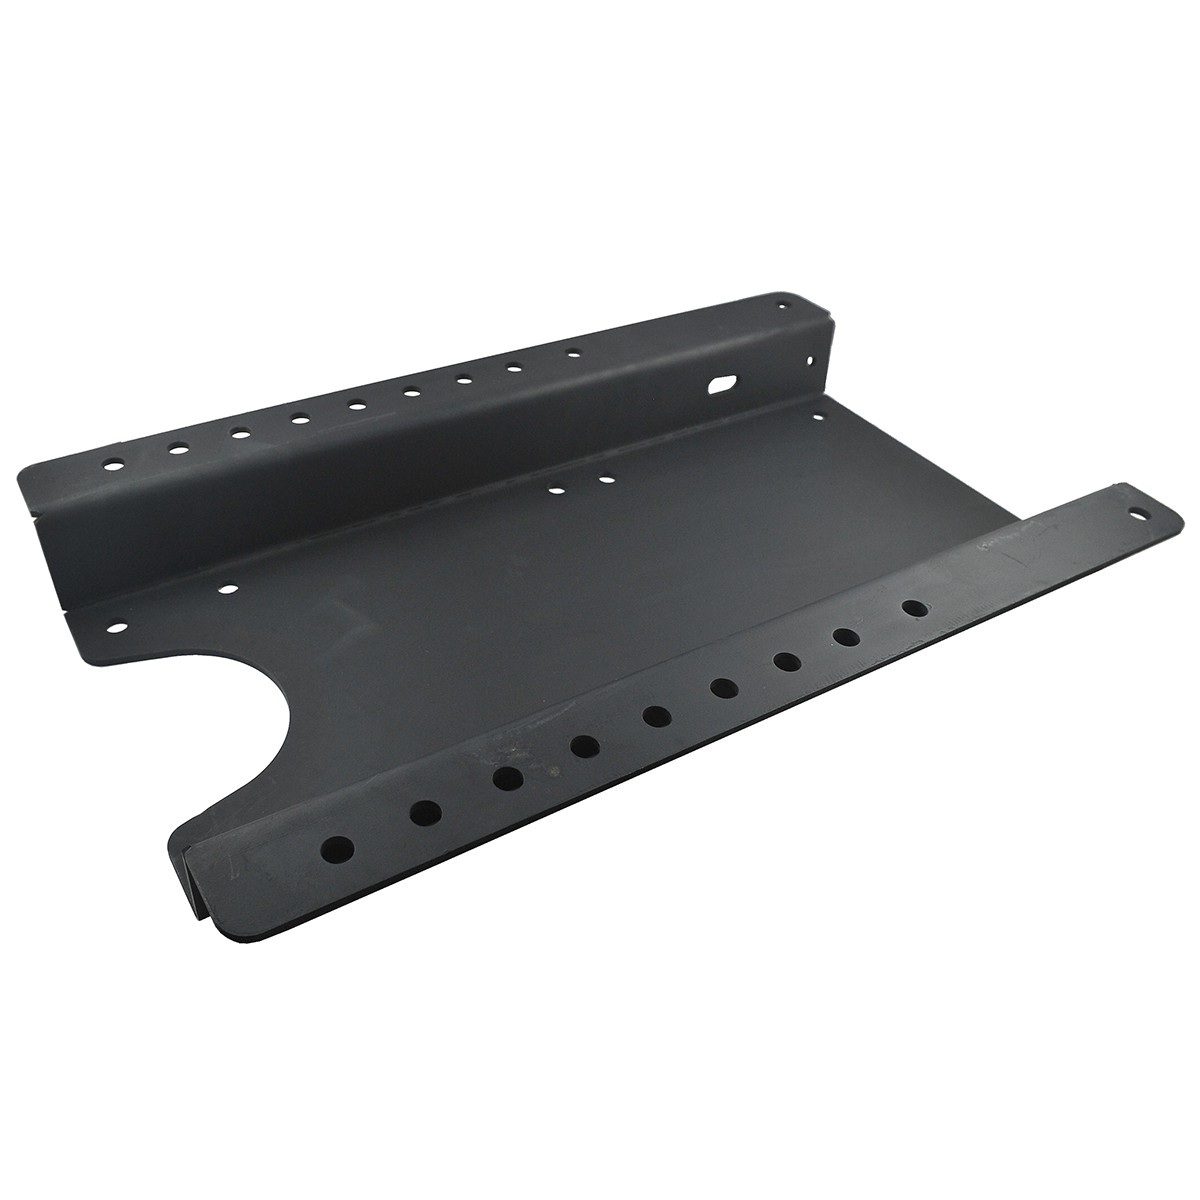 Chipper floor plate / Cedrus RB05 PRO / DR-CS-15HP-H 4FARMER